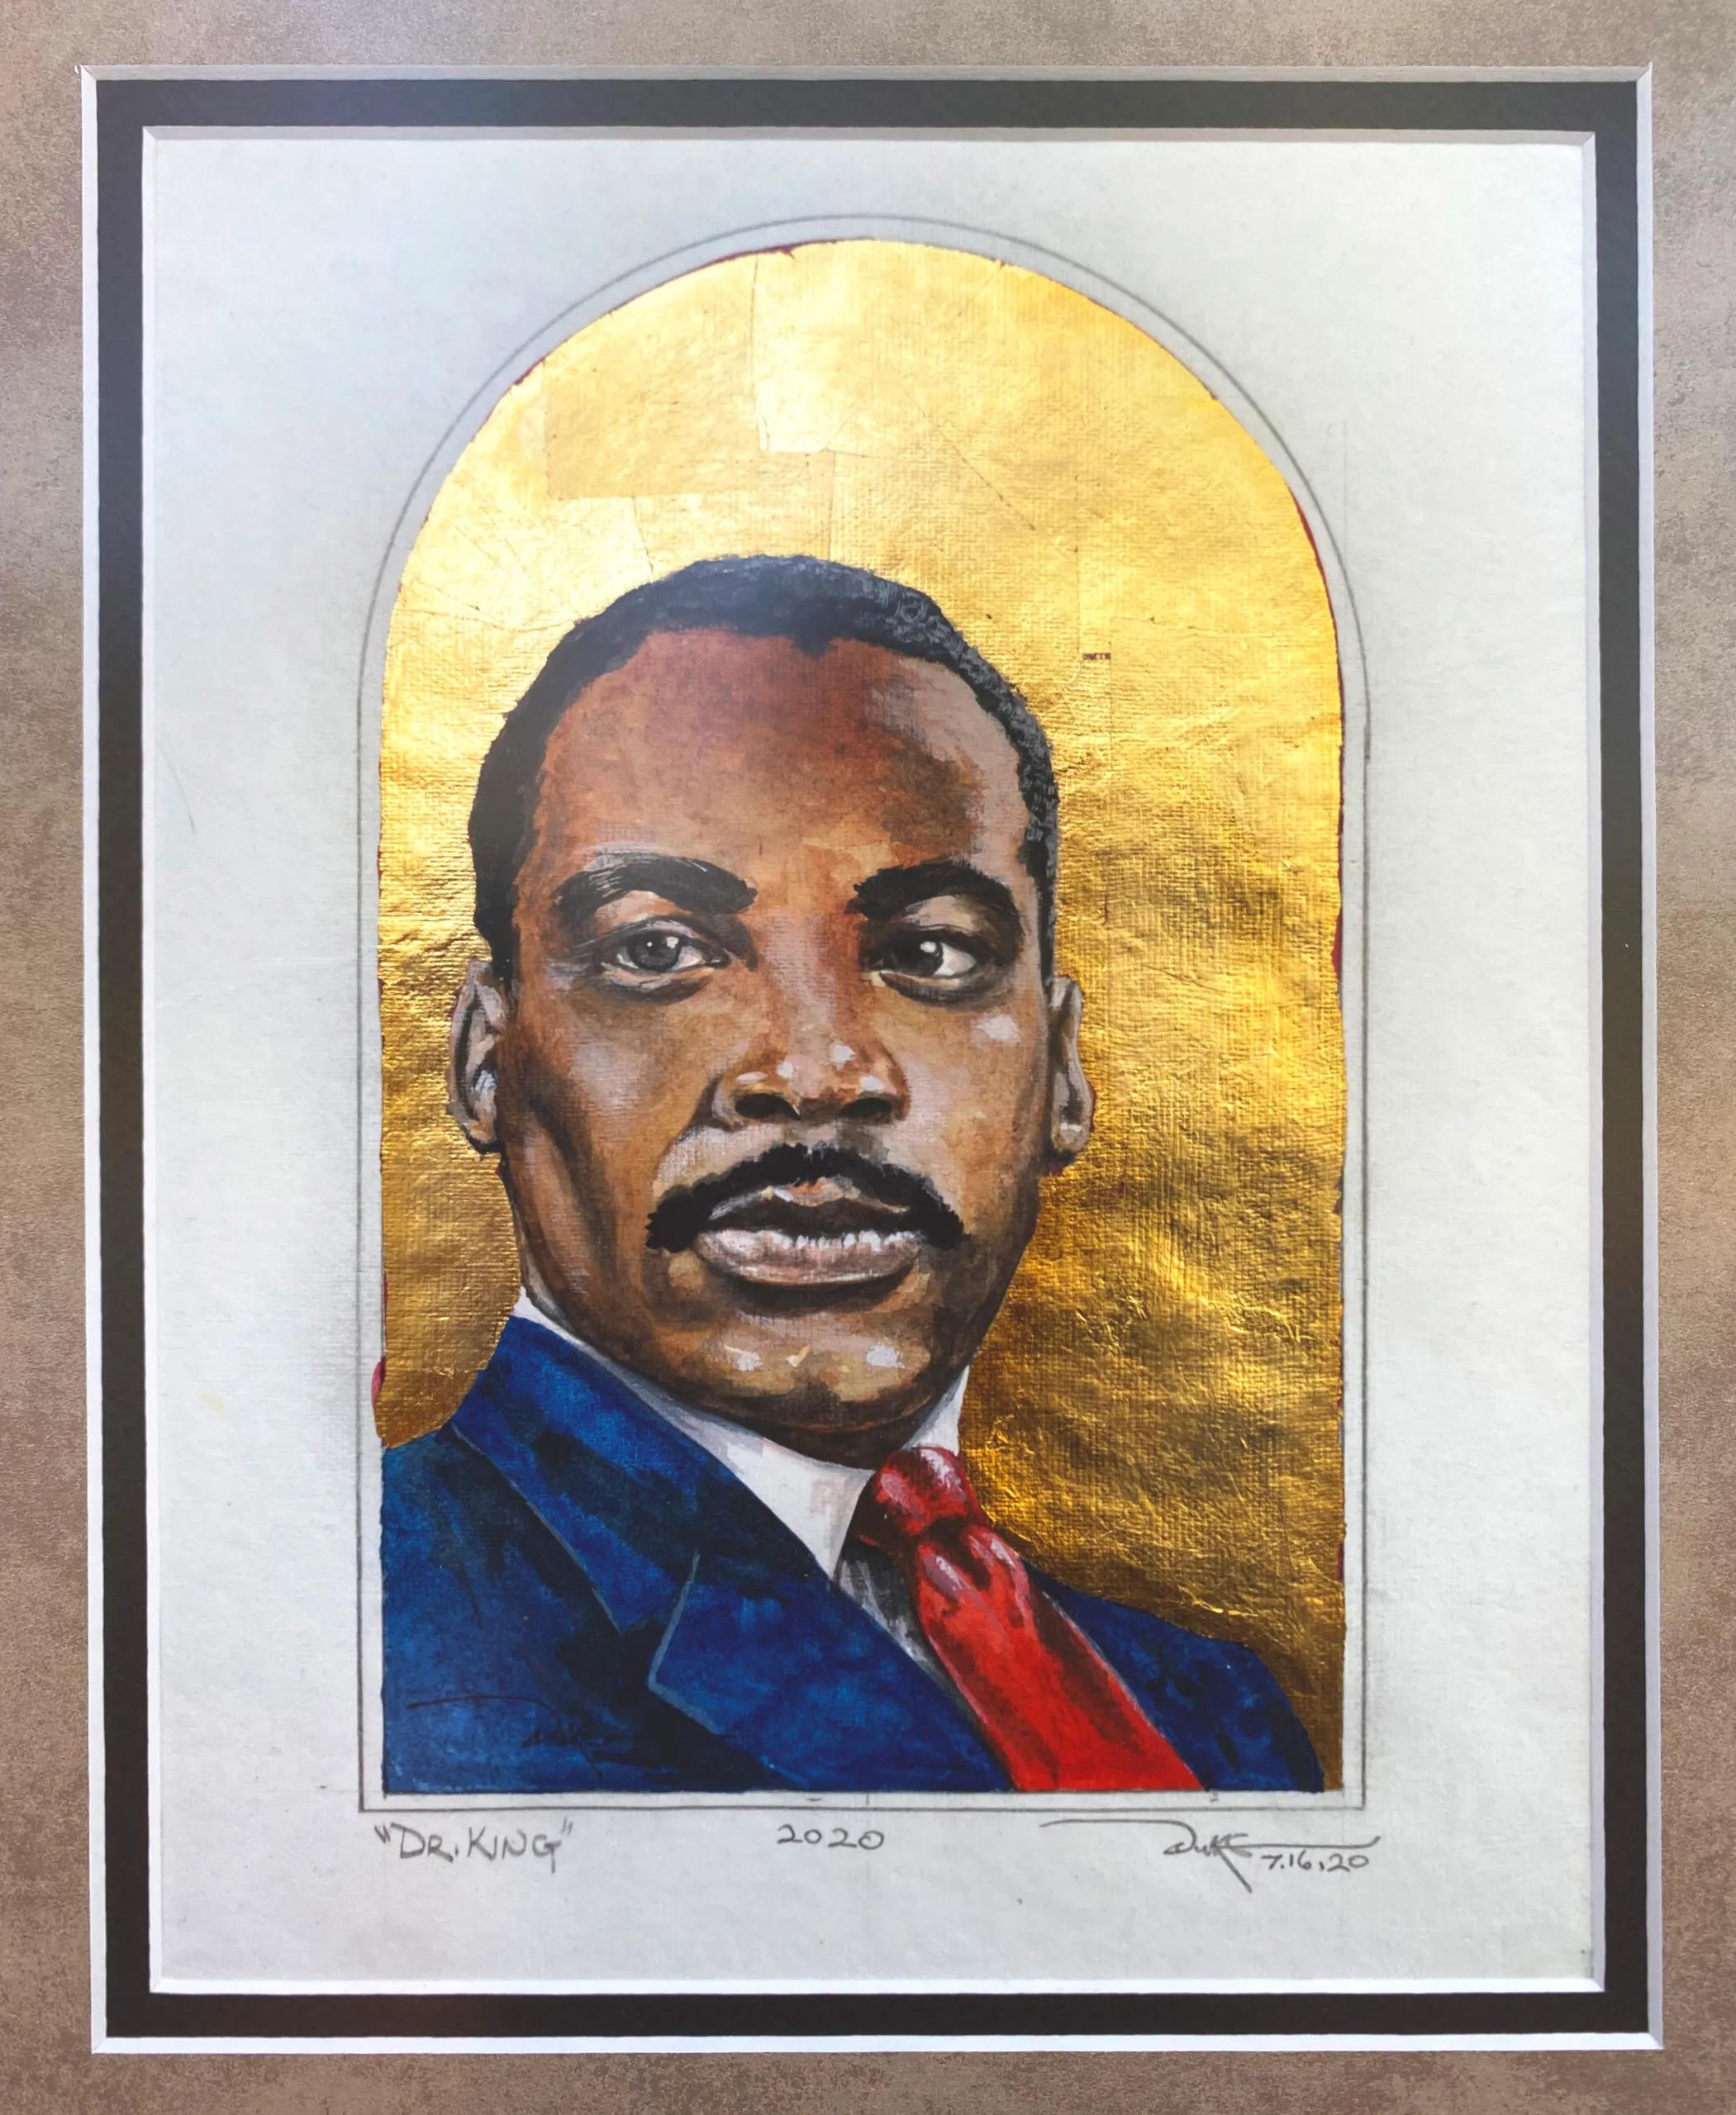 Impressionistisches Portrt, Dr. King – Painting von Duke Windsor